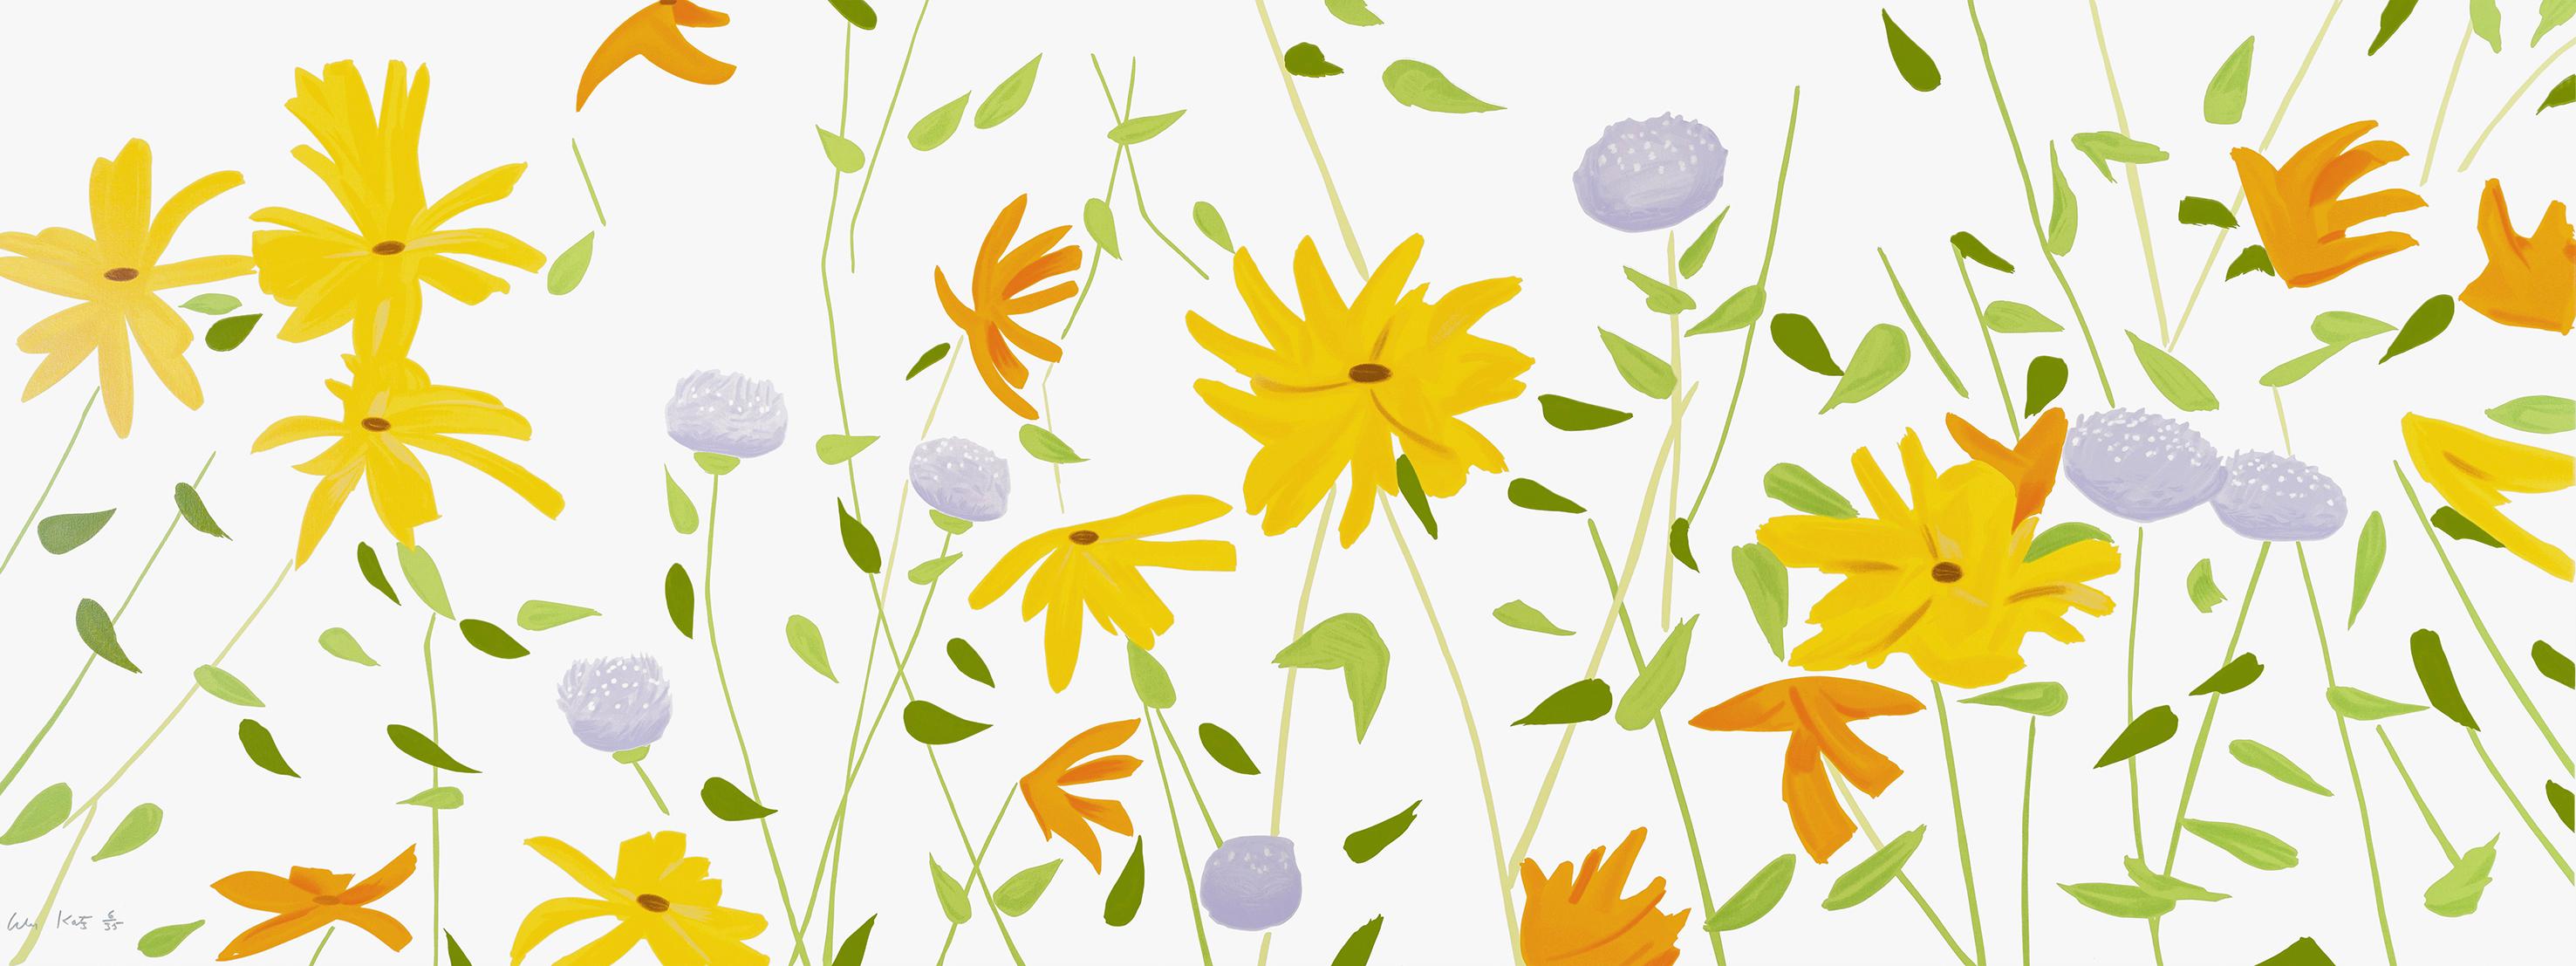 Summer Flowers - summer, flowers, meadow, yellow, orange, lilac, green, canvas